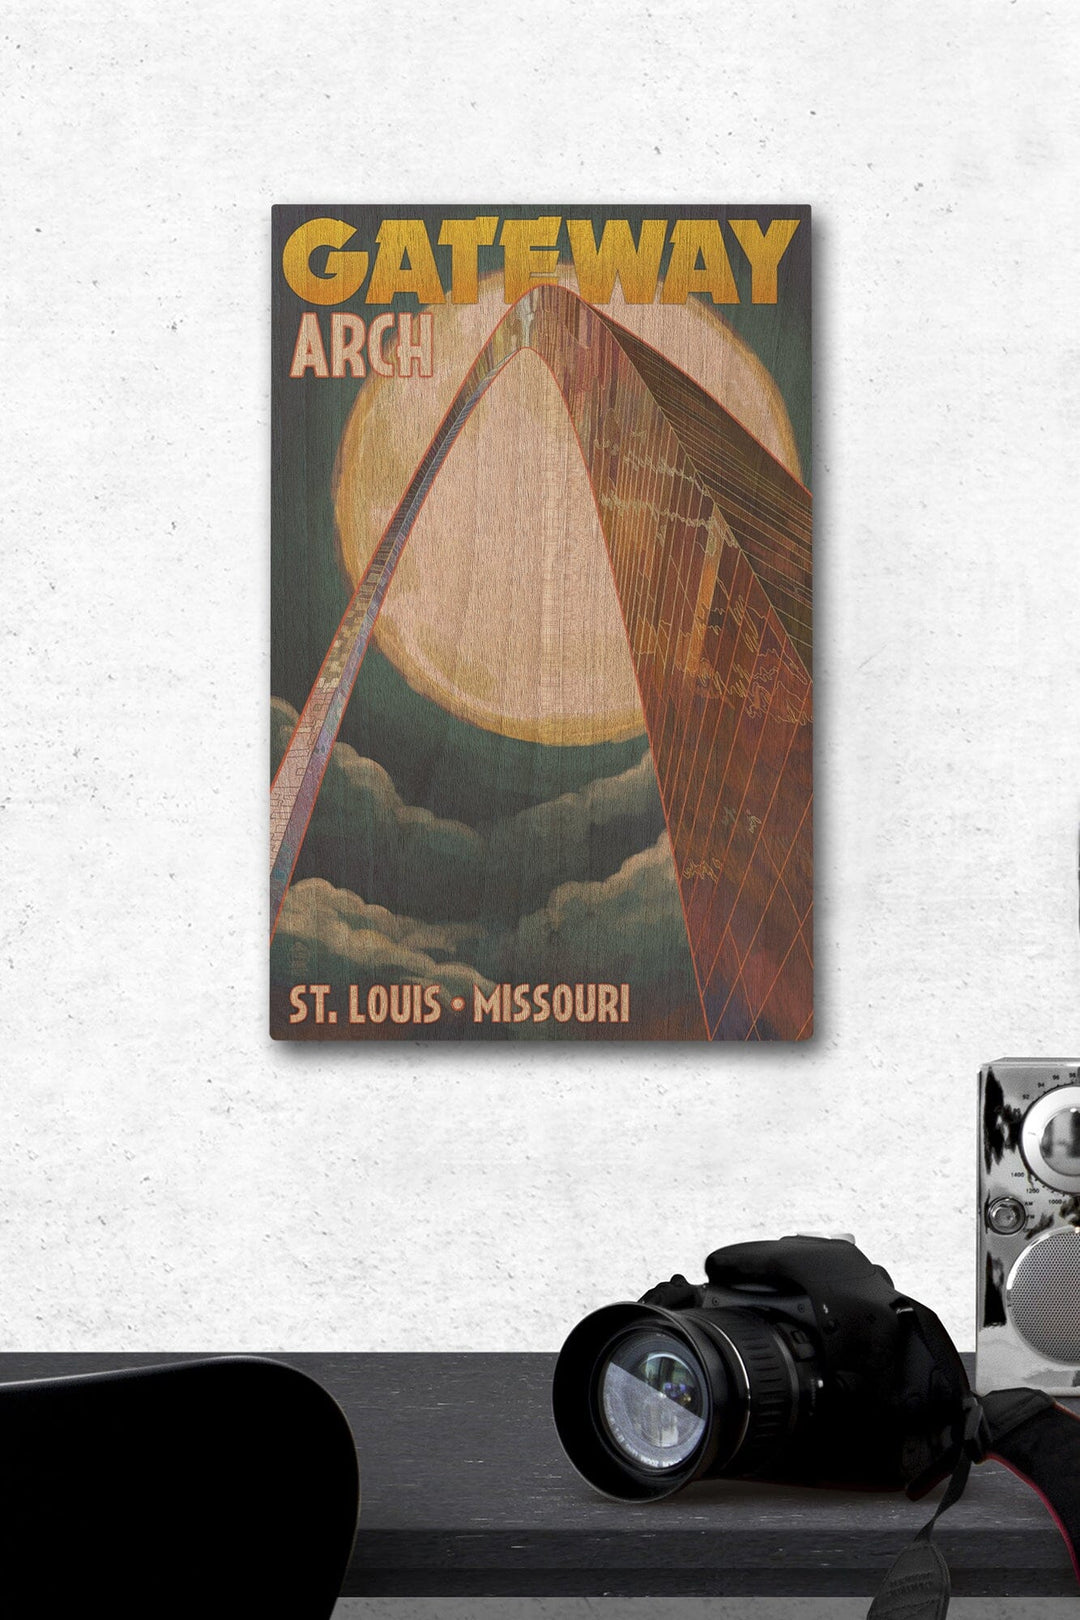 St. Louis, Missouri, Gateway Arch and Moon, Lantern Press Artwork, Wood Signs and Postcards Wood Lantern Press 12 x 18 Wood Gallery Print 